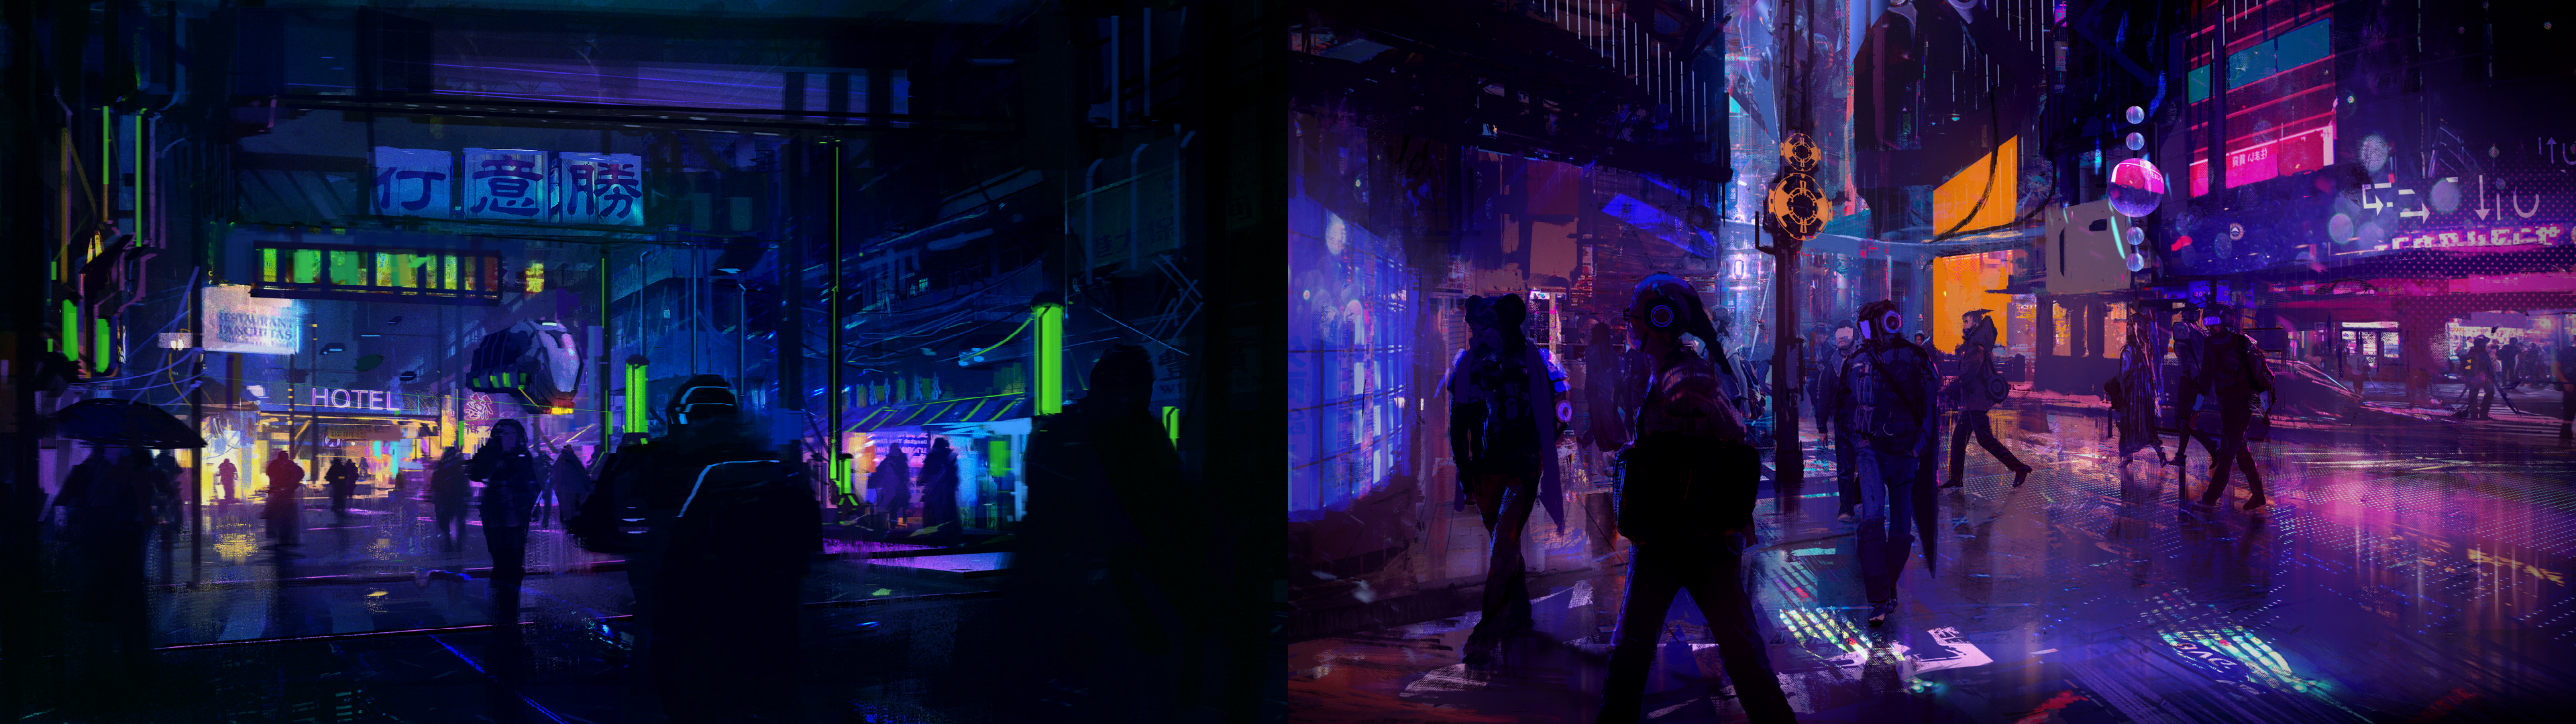 Cyberpunk City: multiwall